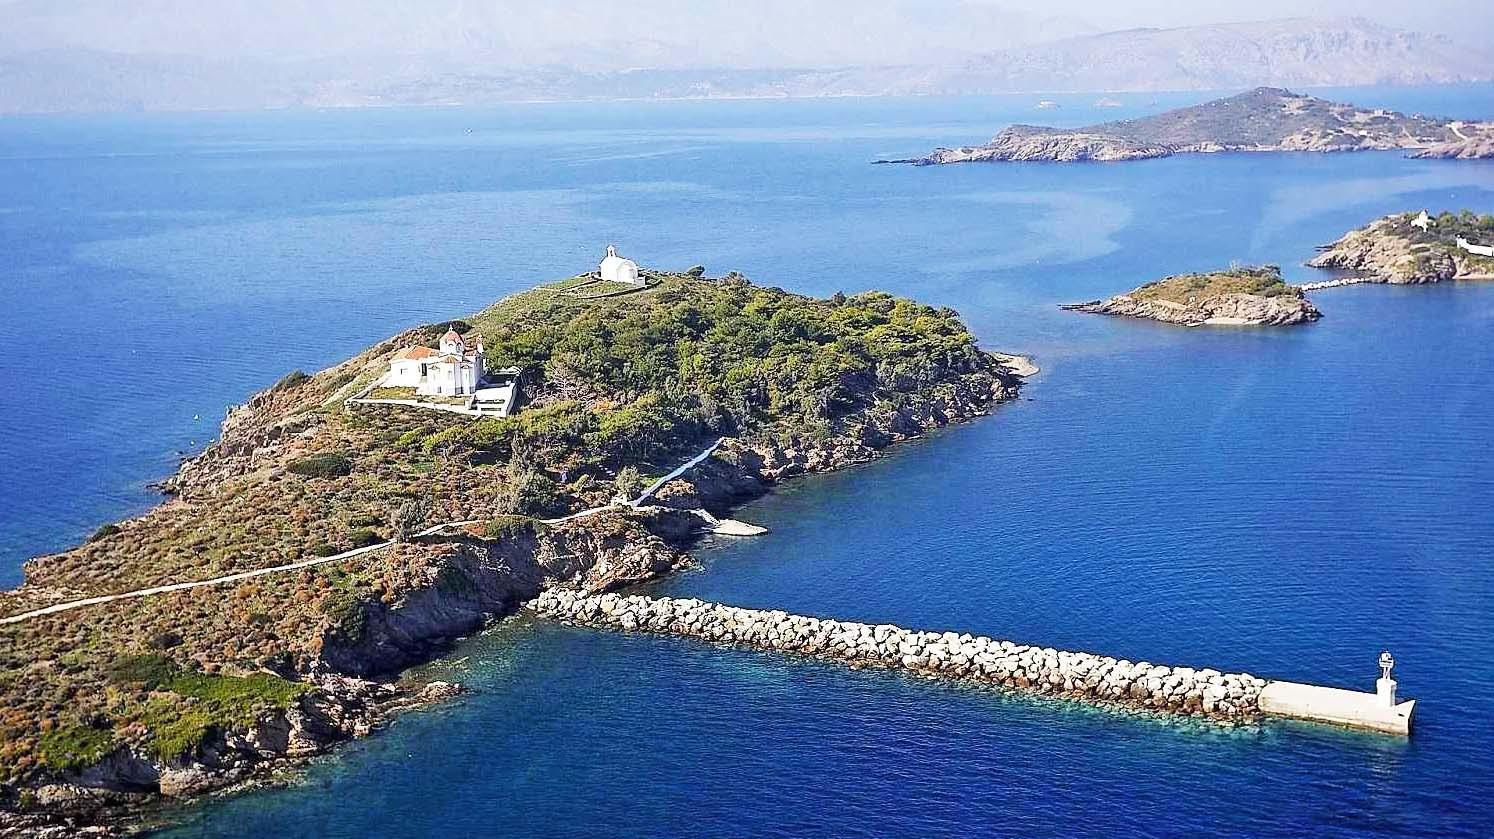 PRIVATE ISLAND IN WEST AEGEAN SEA FOR SALE